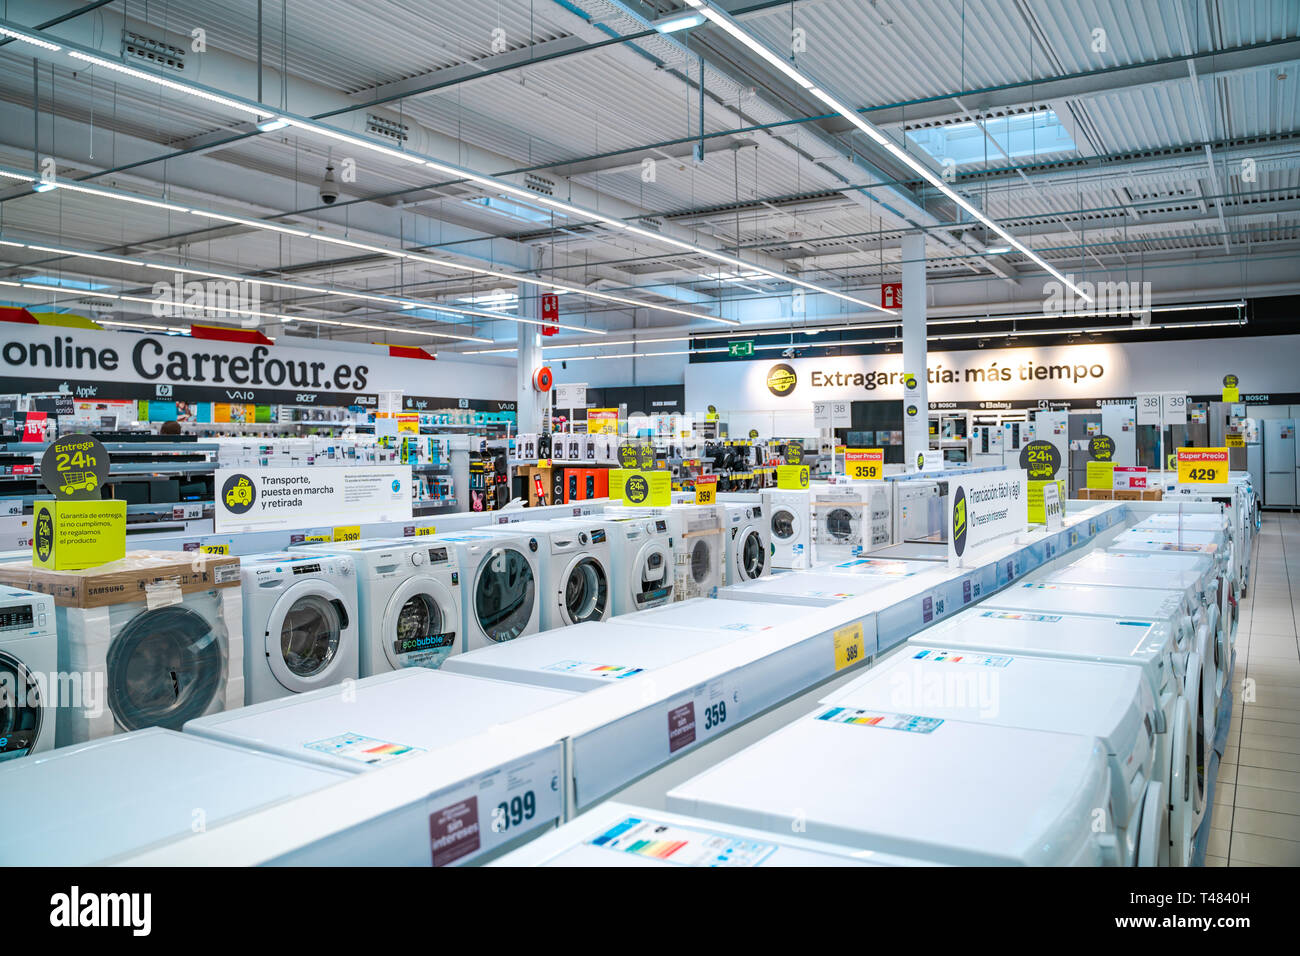 Carrefour department store fotografías e imágenes de alta resolución - Alamy